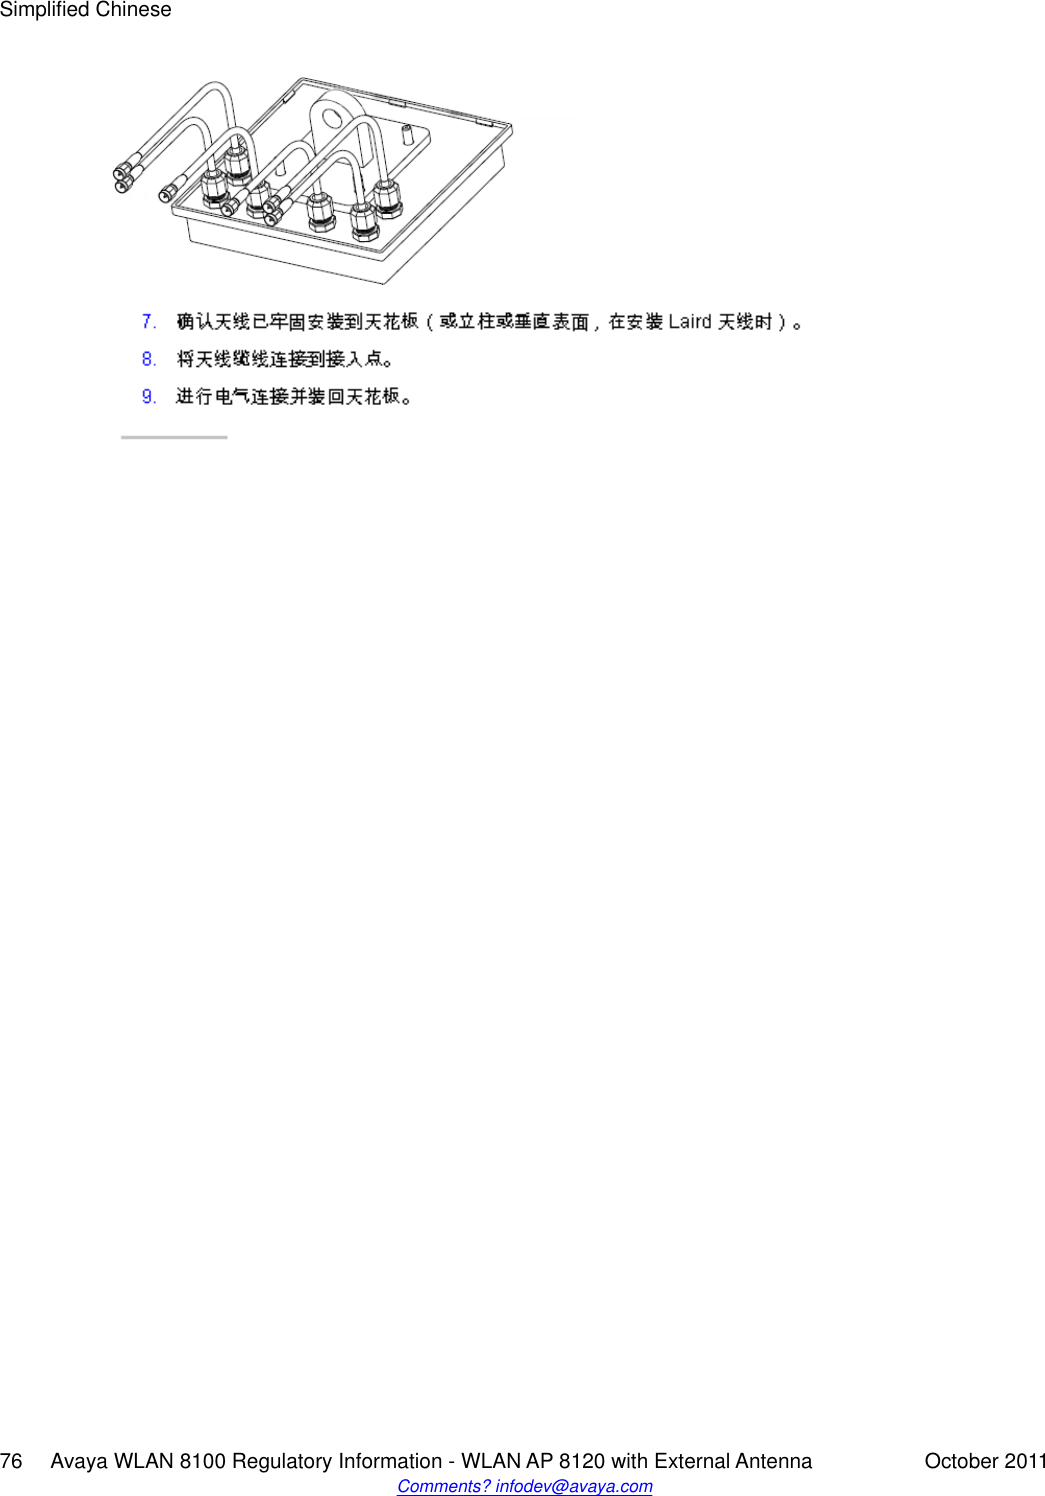 Simplified Chinese76     Avaya WLAN 8100 Regulatory Information - WLAN AP 8120 with External Antenna October 2011Comments? infodev@avaya.com